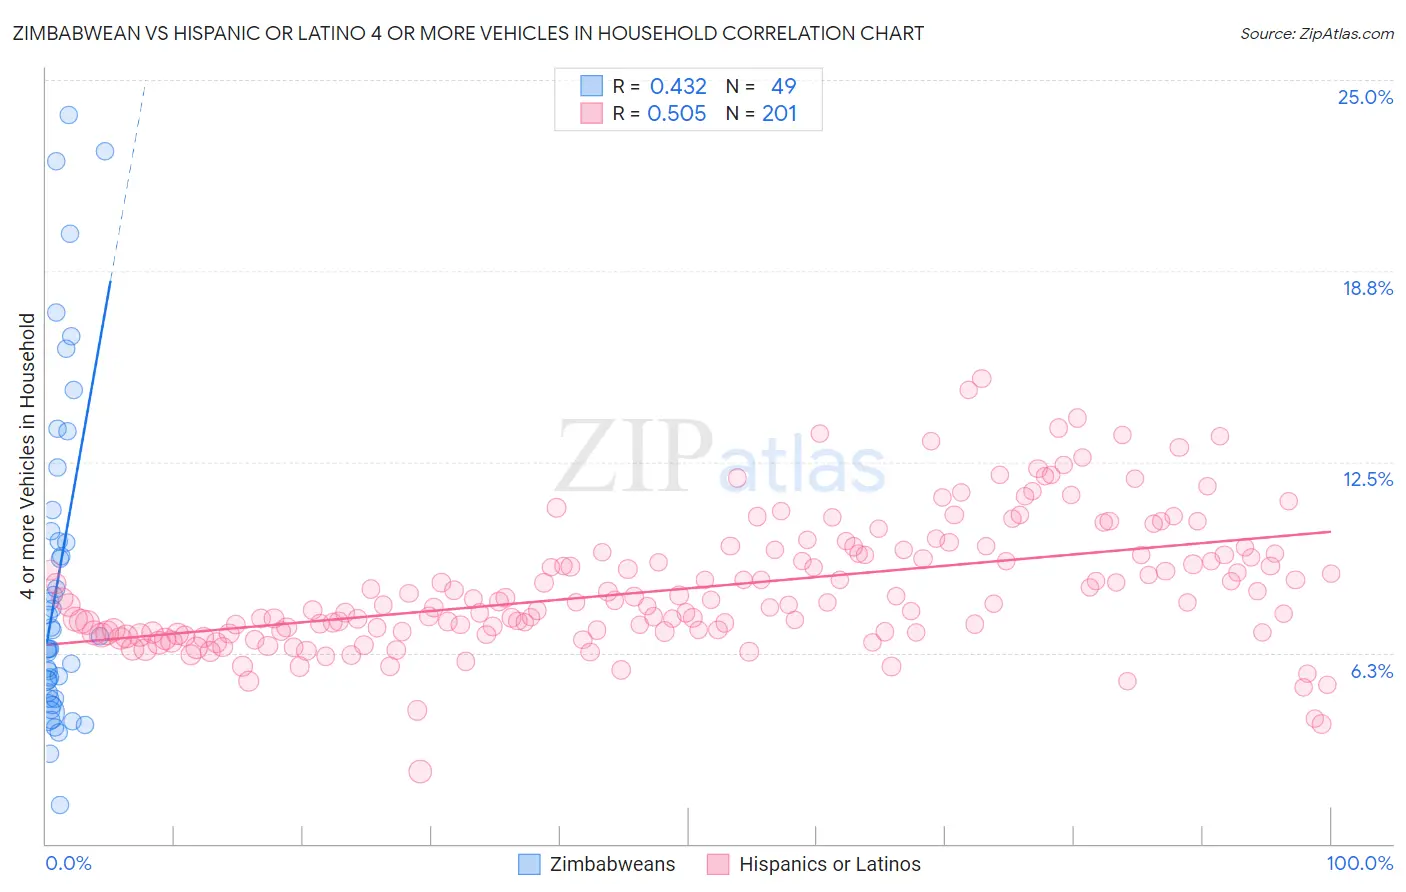 Zimbabwean vs Hispanic or Latino 4 or more Vehicles in Household